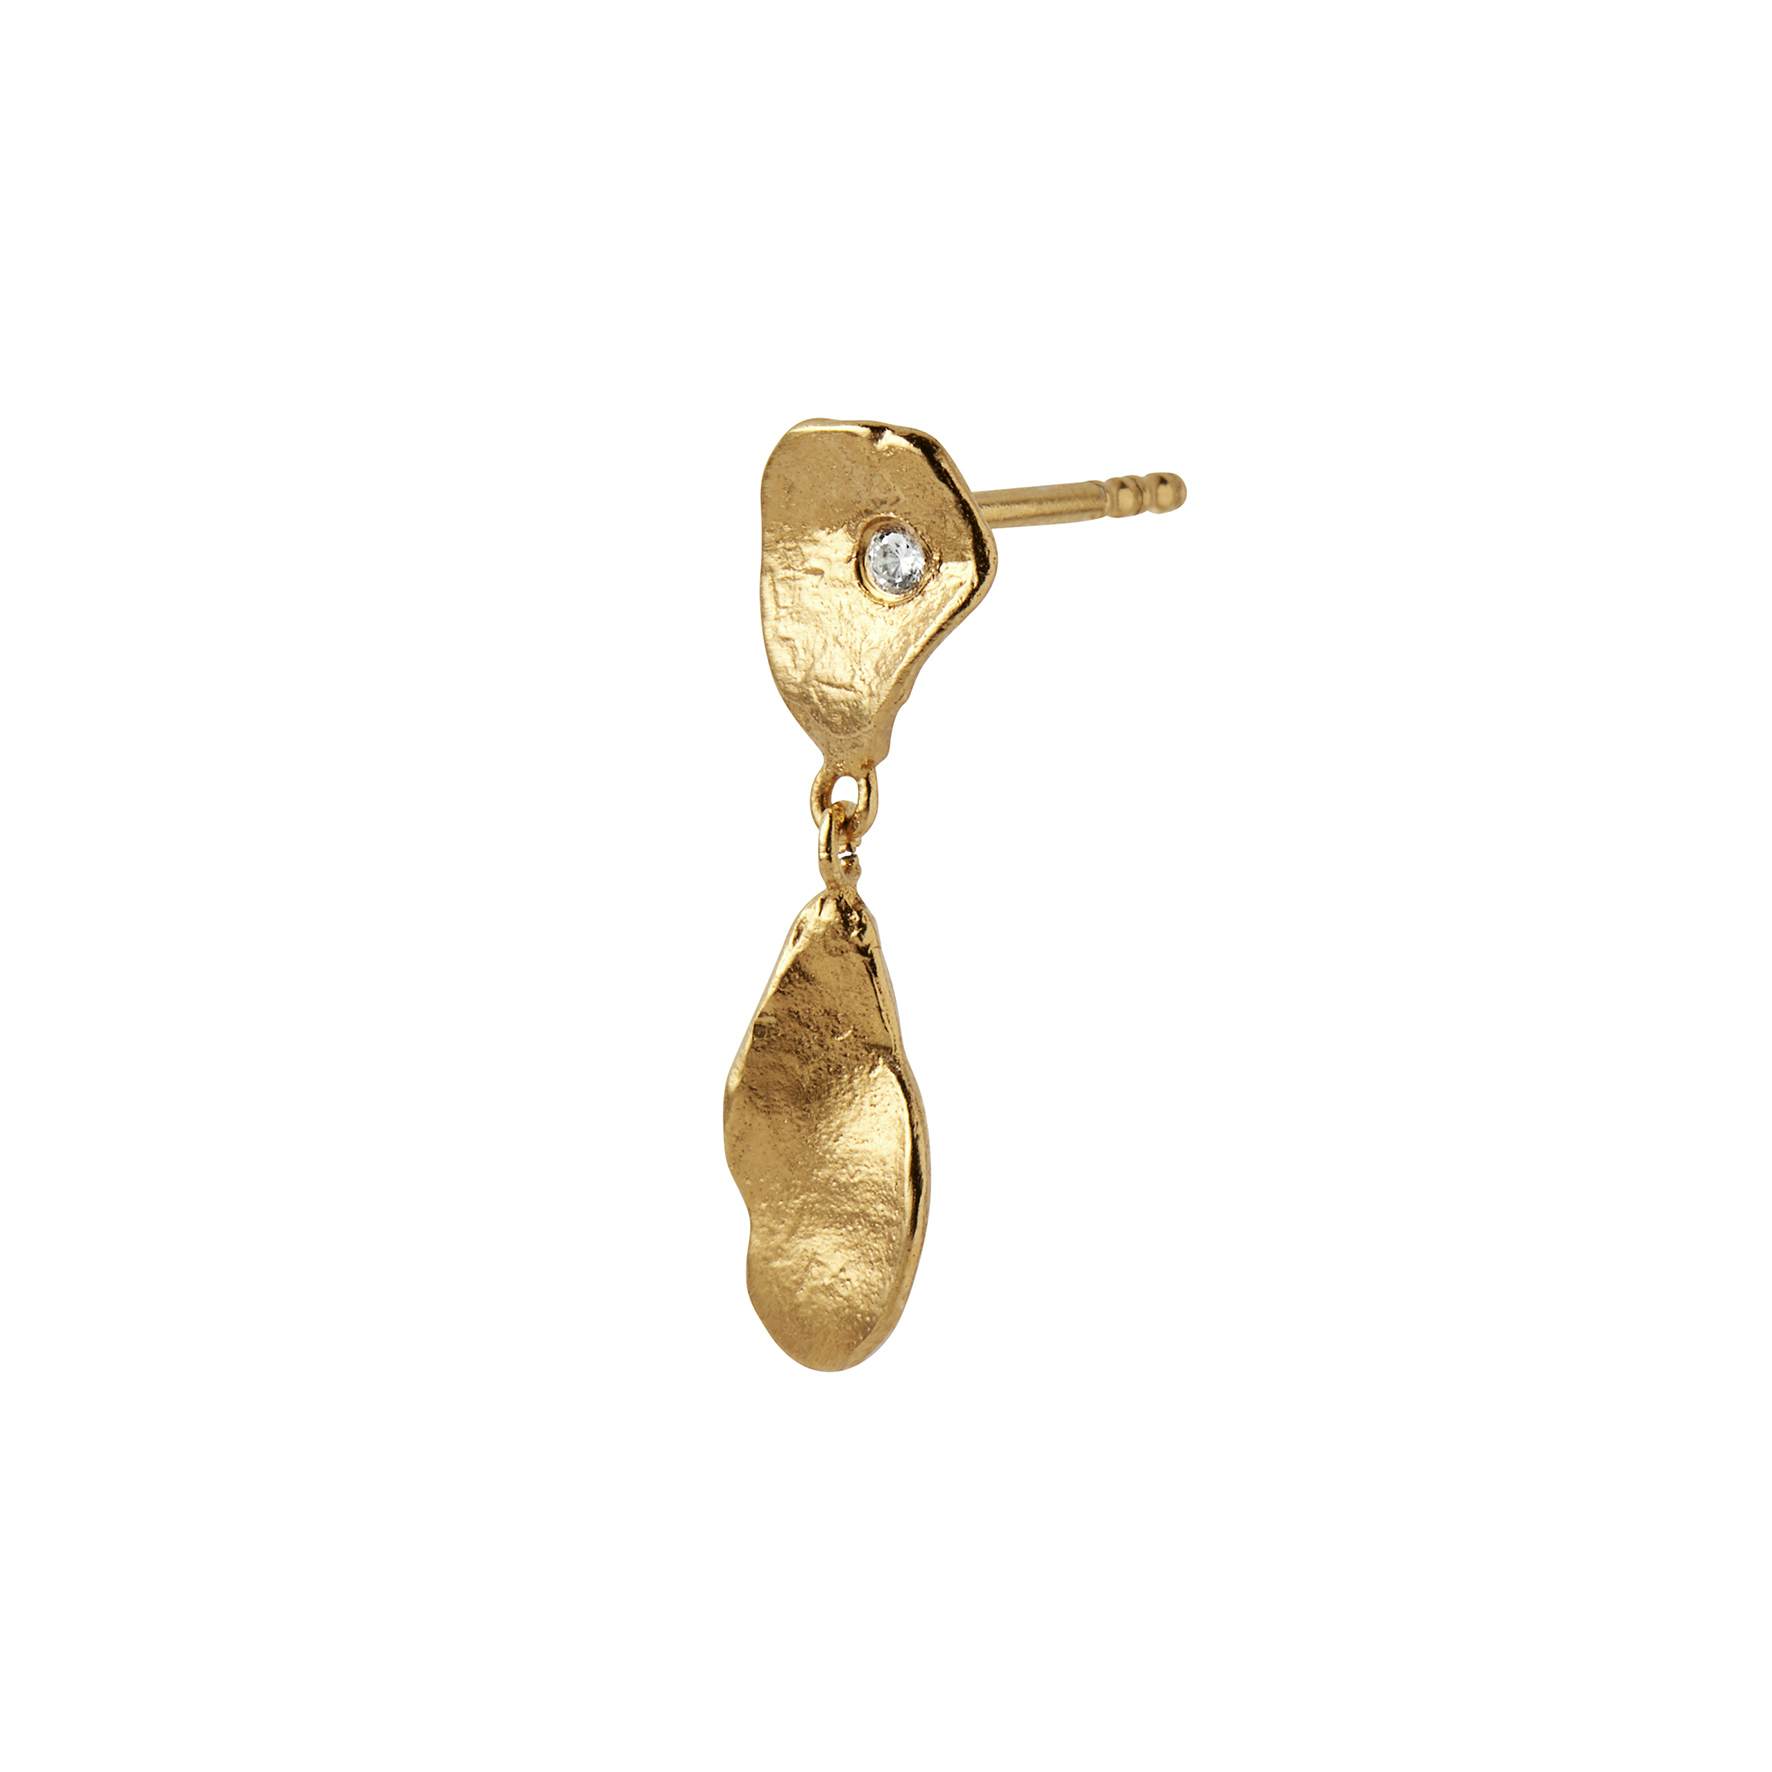 Clear Sea Earring With Stone från STINE A Jewelry i Förgyllt-Silver Sterling 925